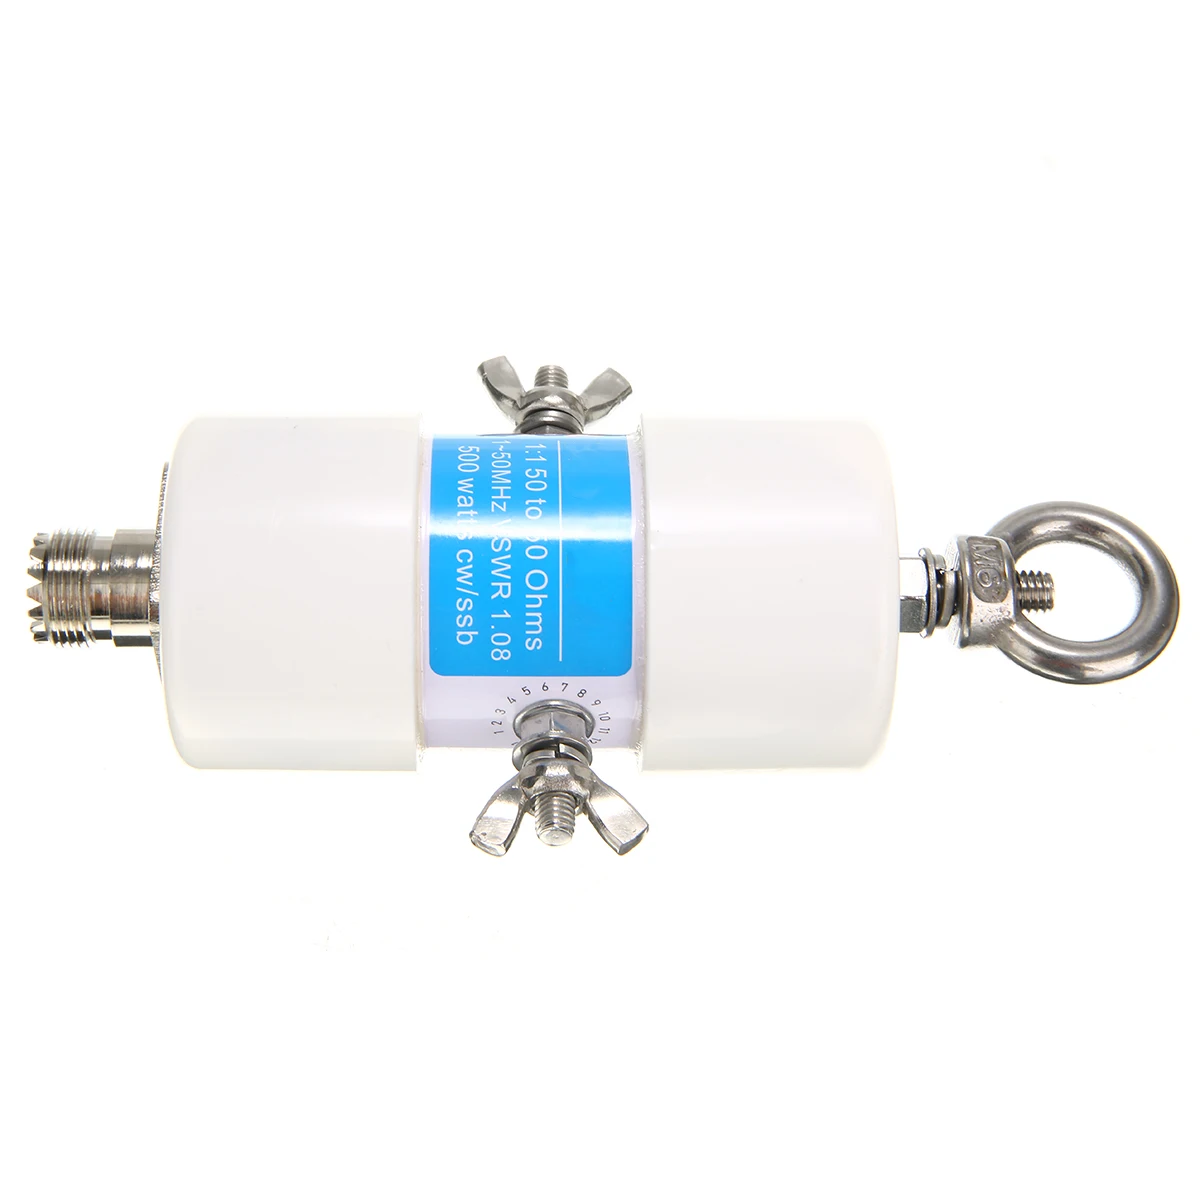 1pc Universal 1:1 Voltage Balun Waterproof HF Balun Voltage Balun for 160m-6m Bands 1.8-50MHz 500W Shortwave Antenna Balun